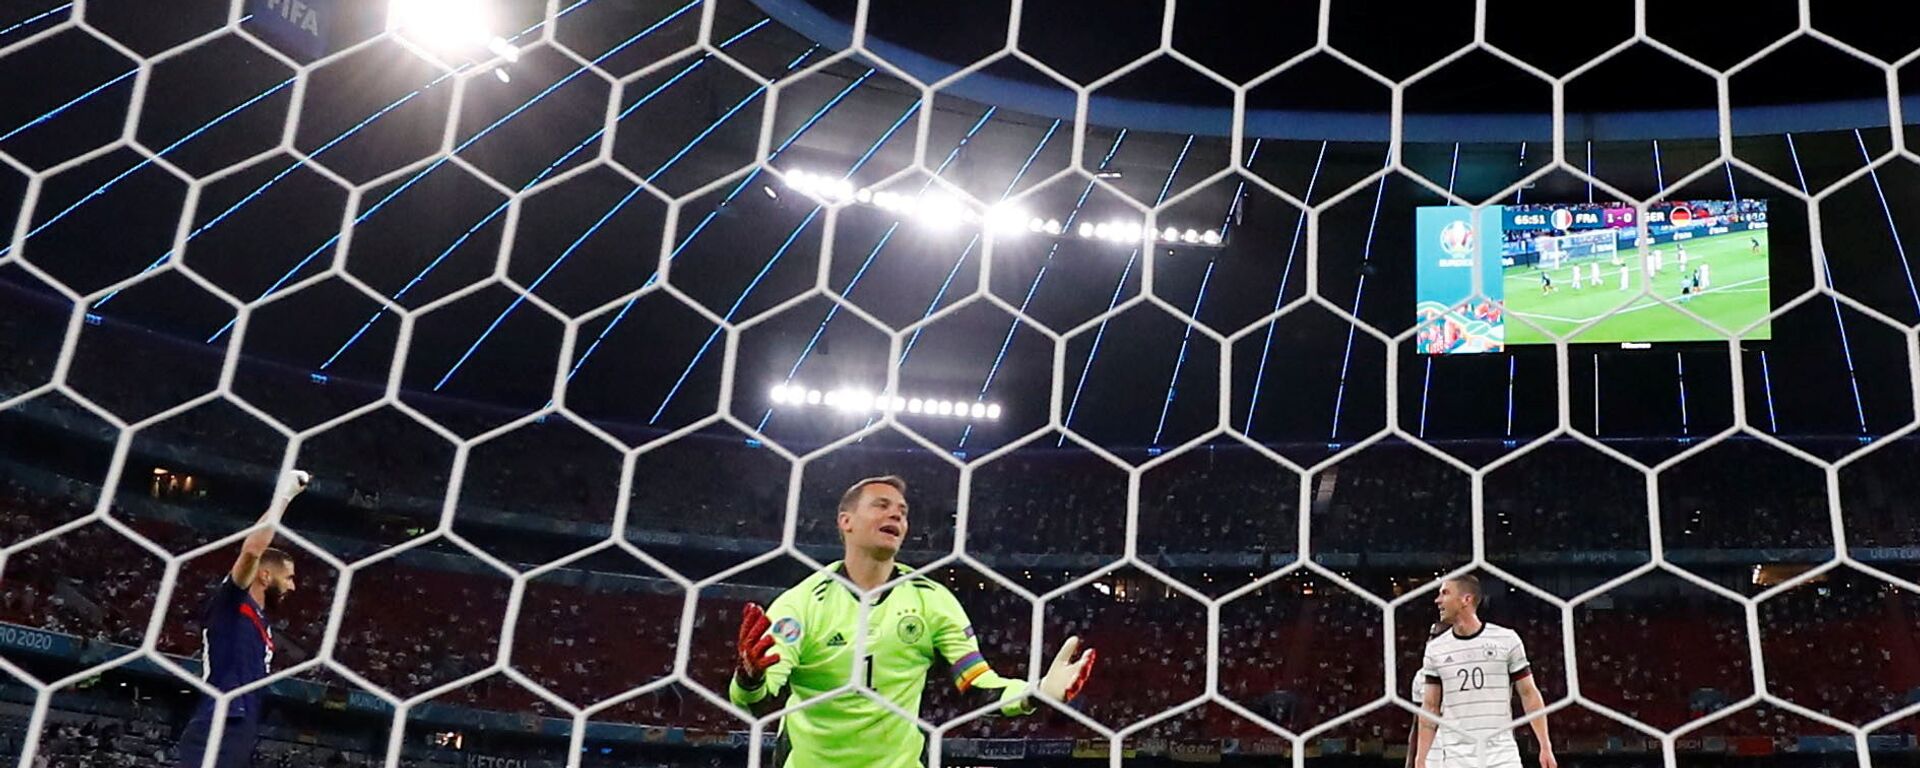 مانوئل نویر دروازه بان جرمنی  Germany's Manuel Neuer reacts before a goal scored by France's Kylian Mbappe is disallowed for offside, June 15, 2021 - اسپوتنیک افغانستان  , 1920, 12.10.2021